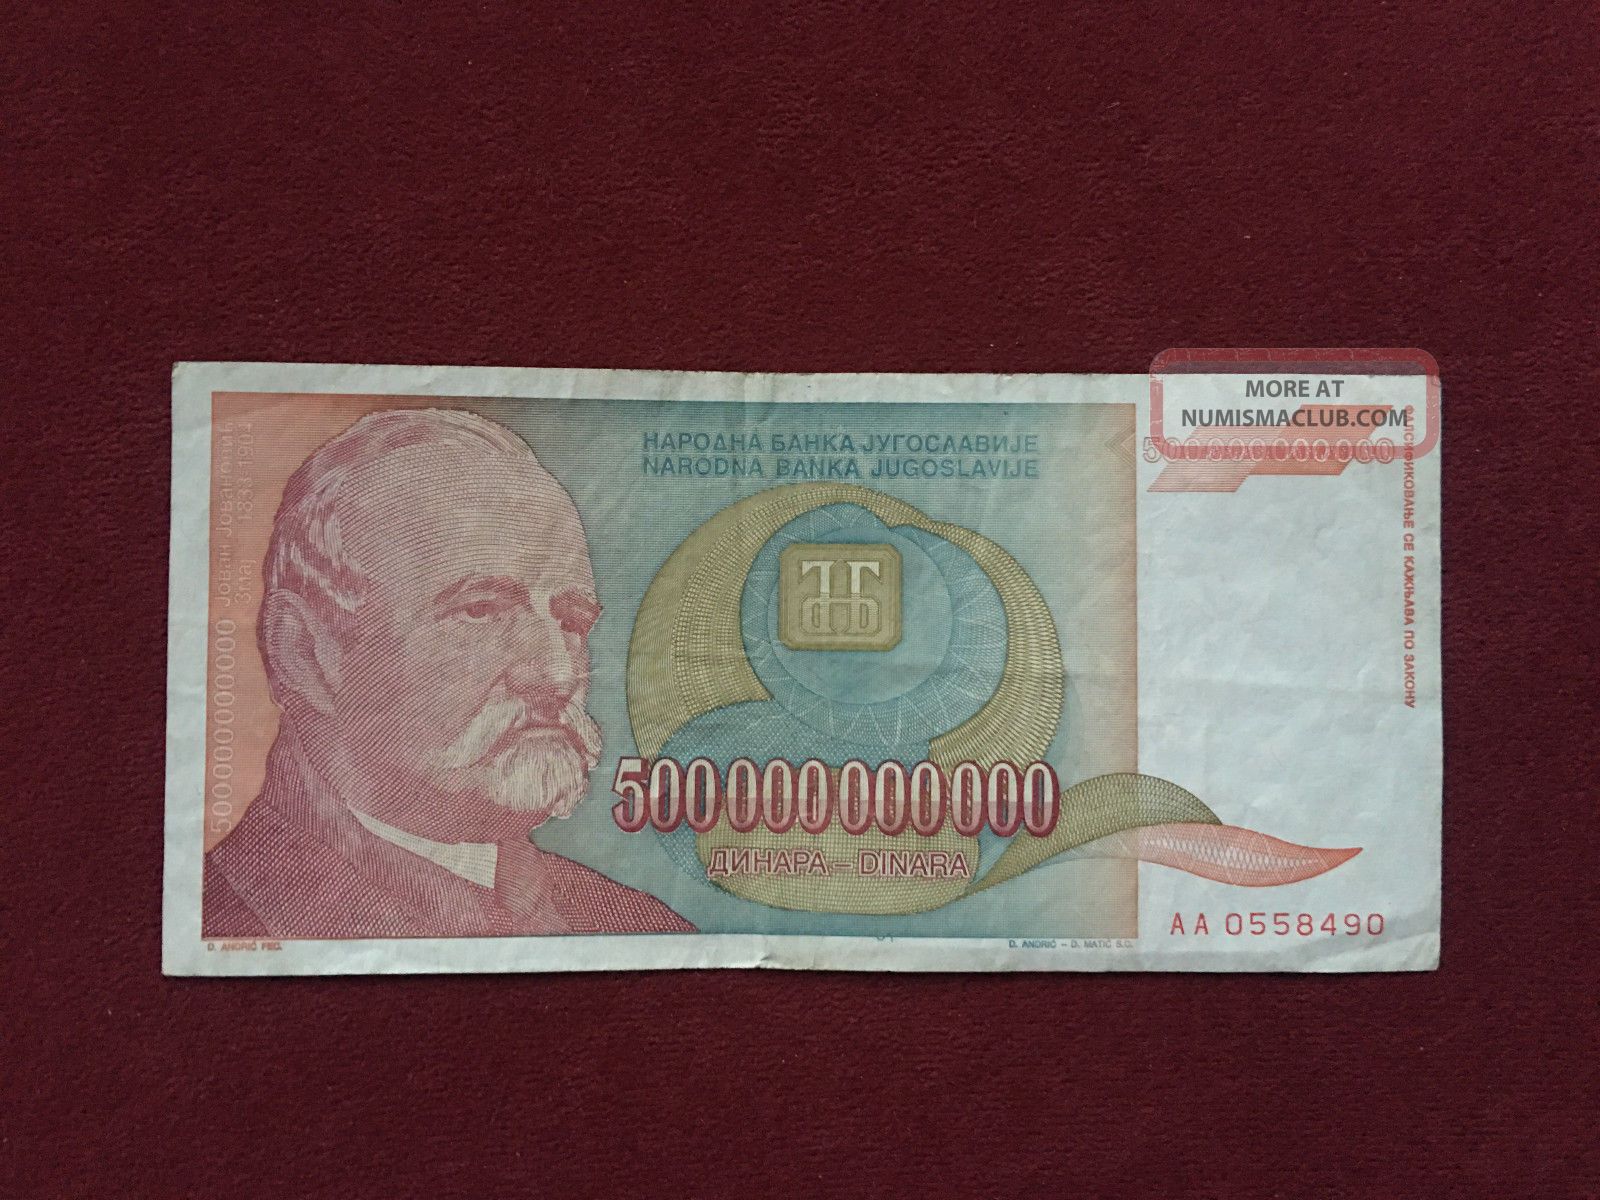 1993 Yugoslavia - 500 Billion Dinars Banknote - Inflation Currency Europe photo